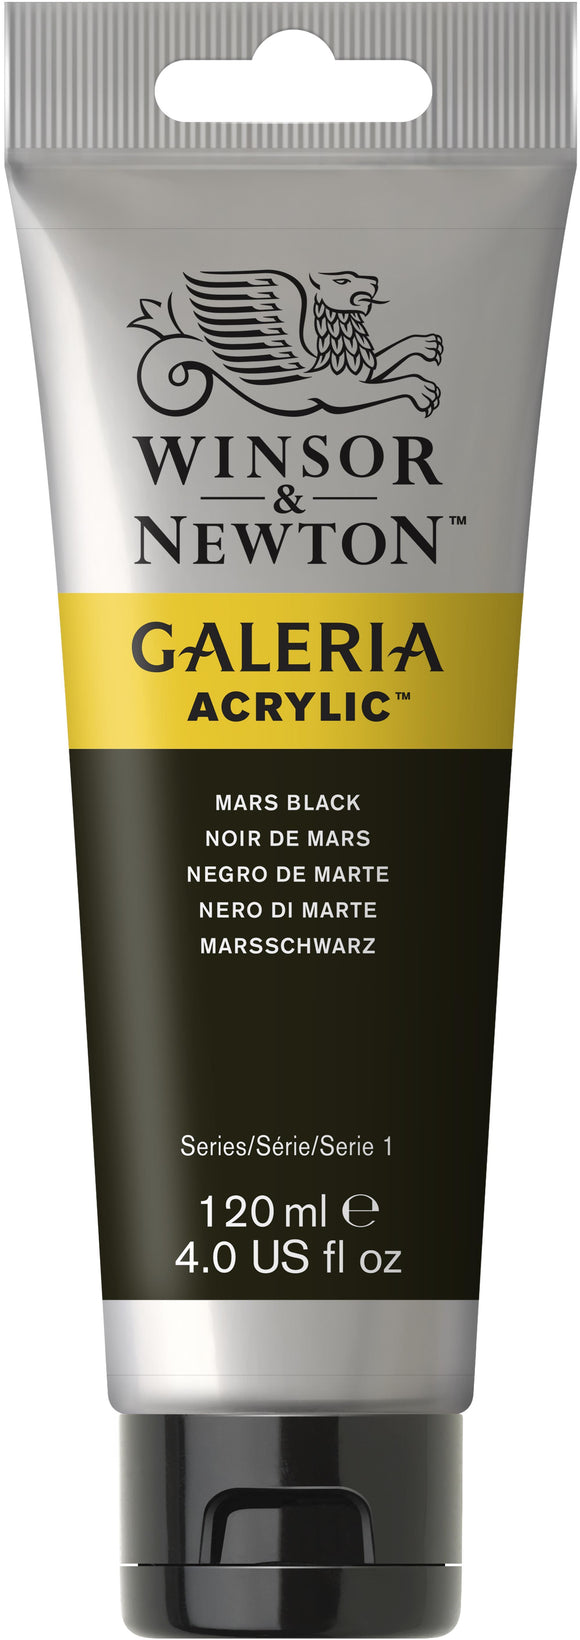 Winsor & Newton Galeria Acrylic Mars Black 120Ml